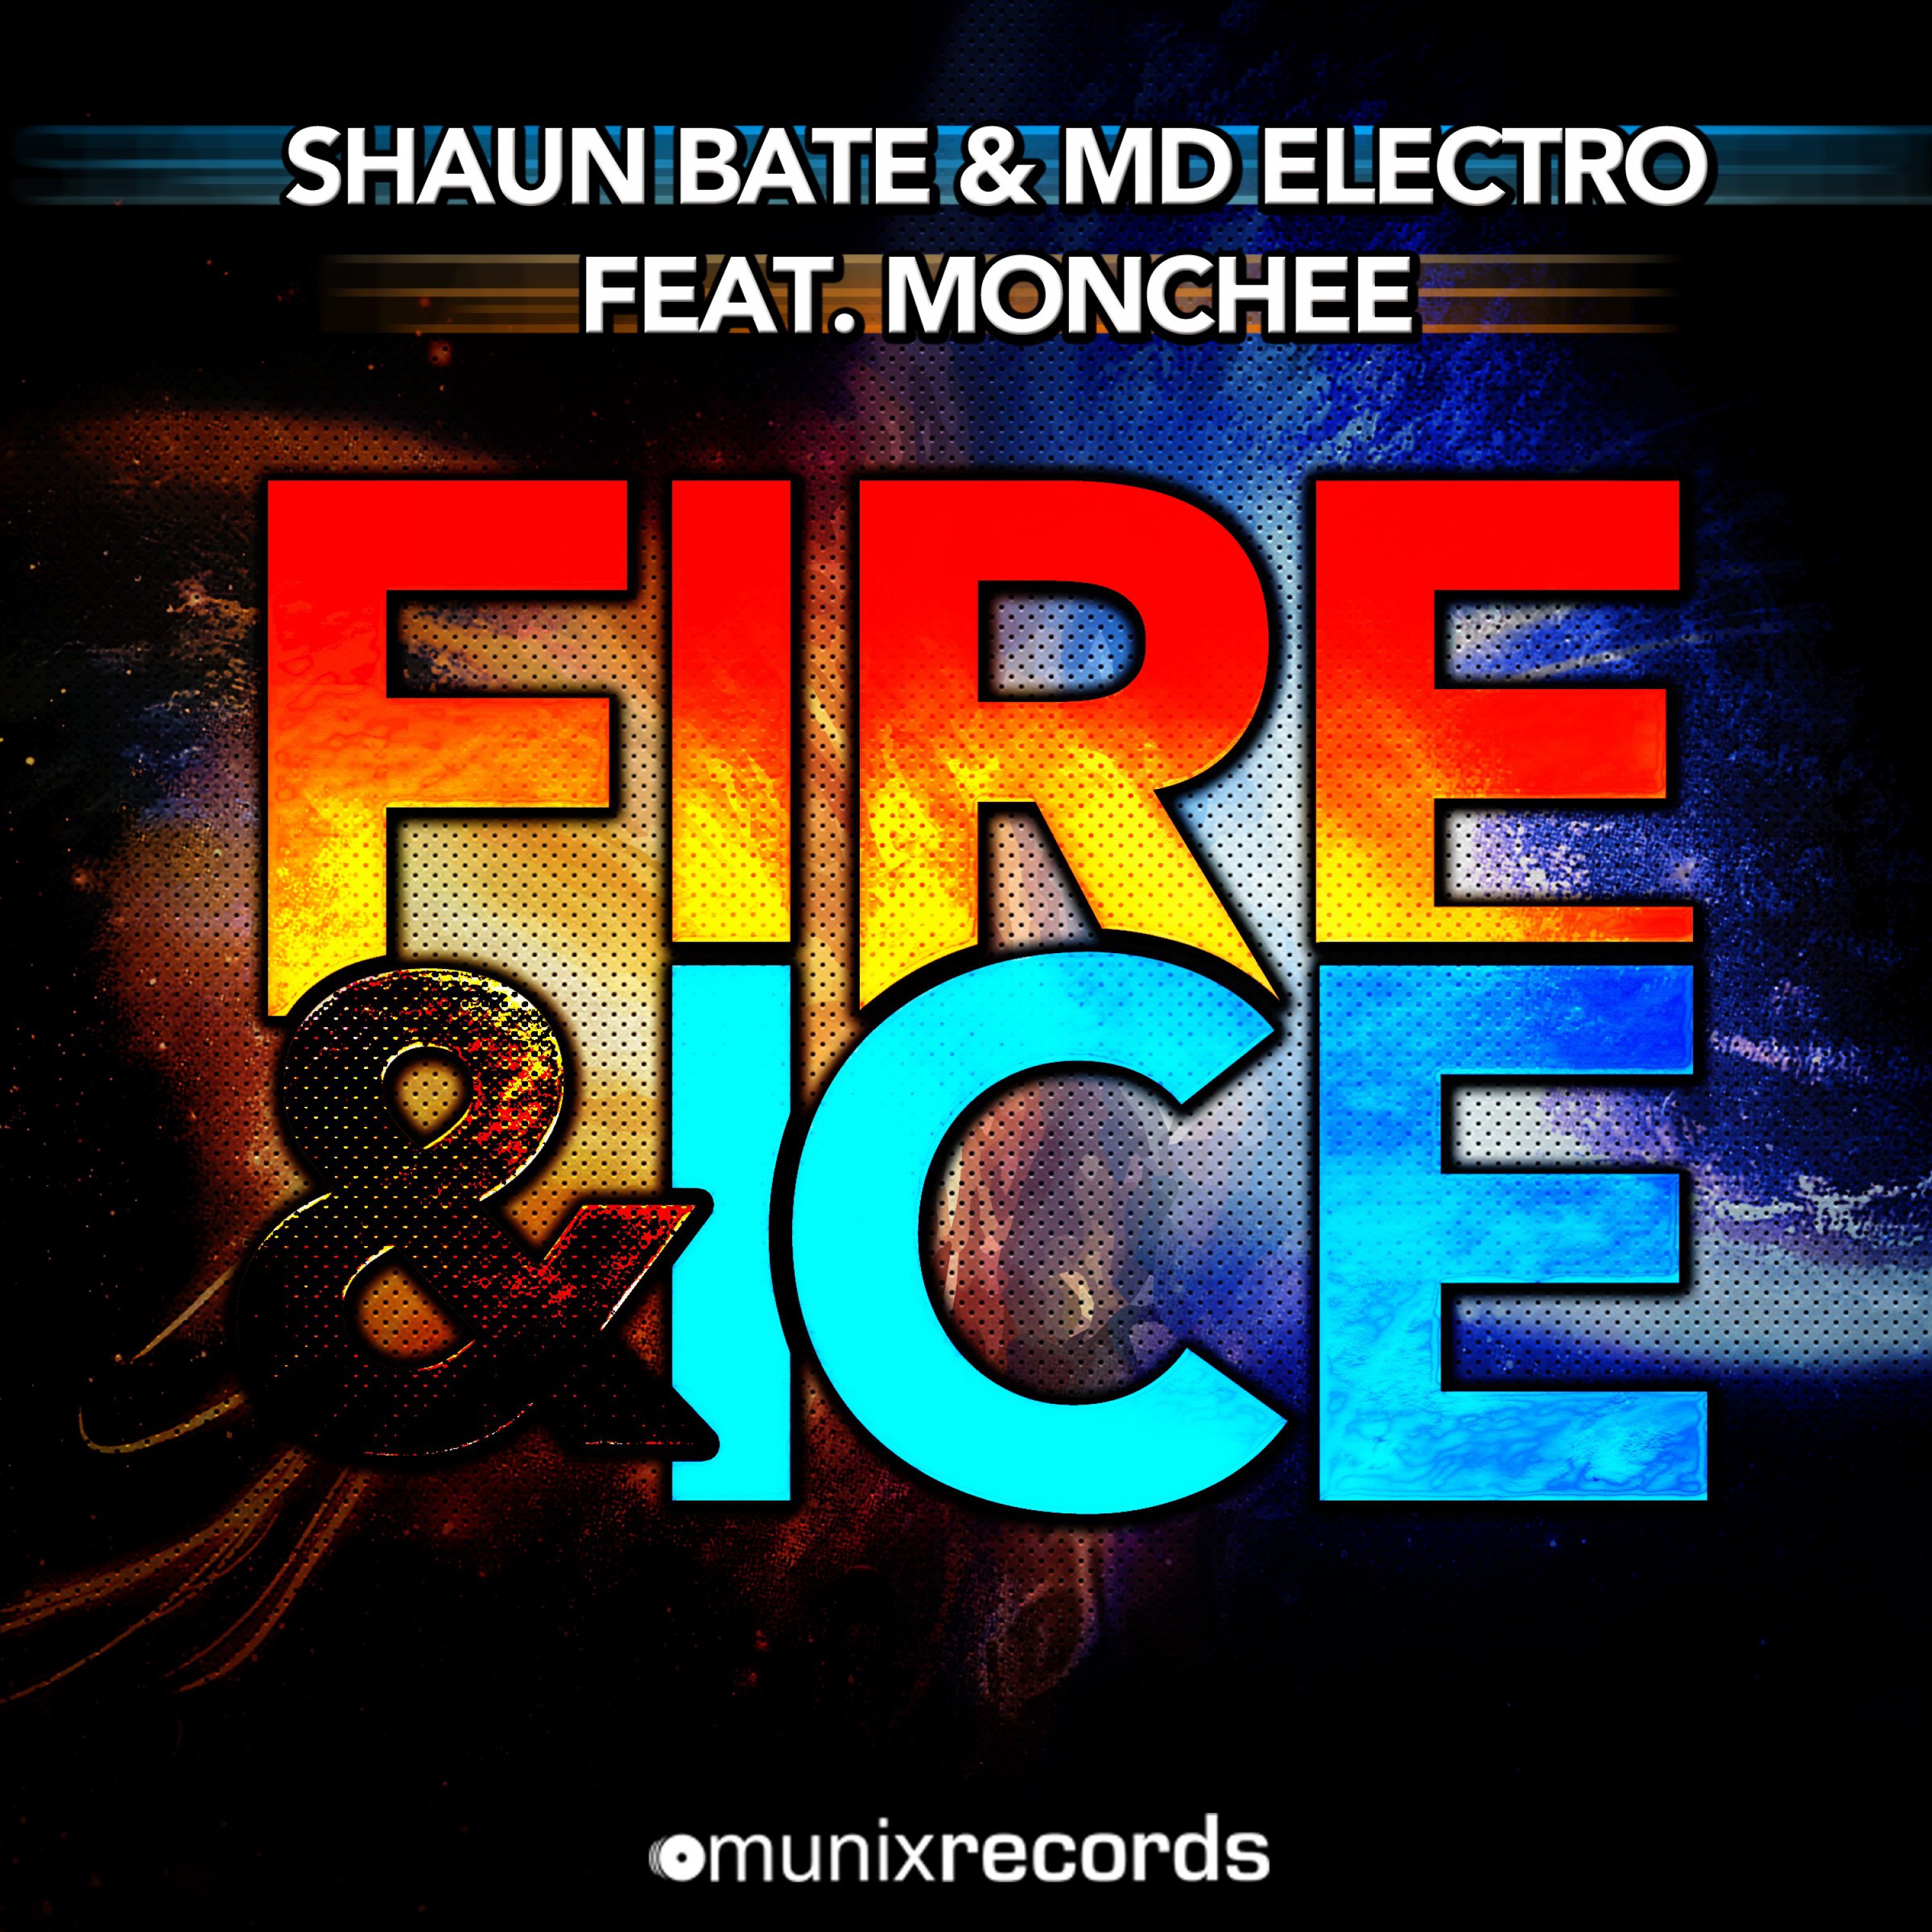 Fire & Ice (Gordon & Doyle vs. Dirty Impact Remix)